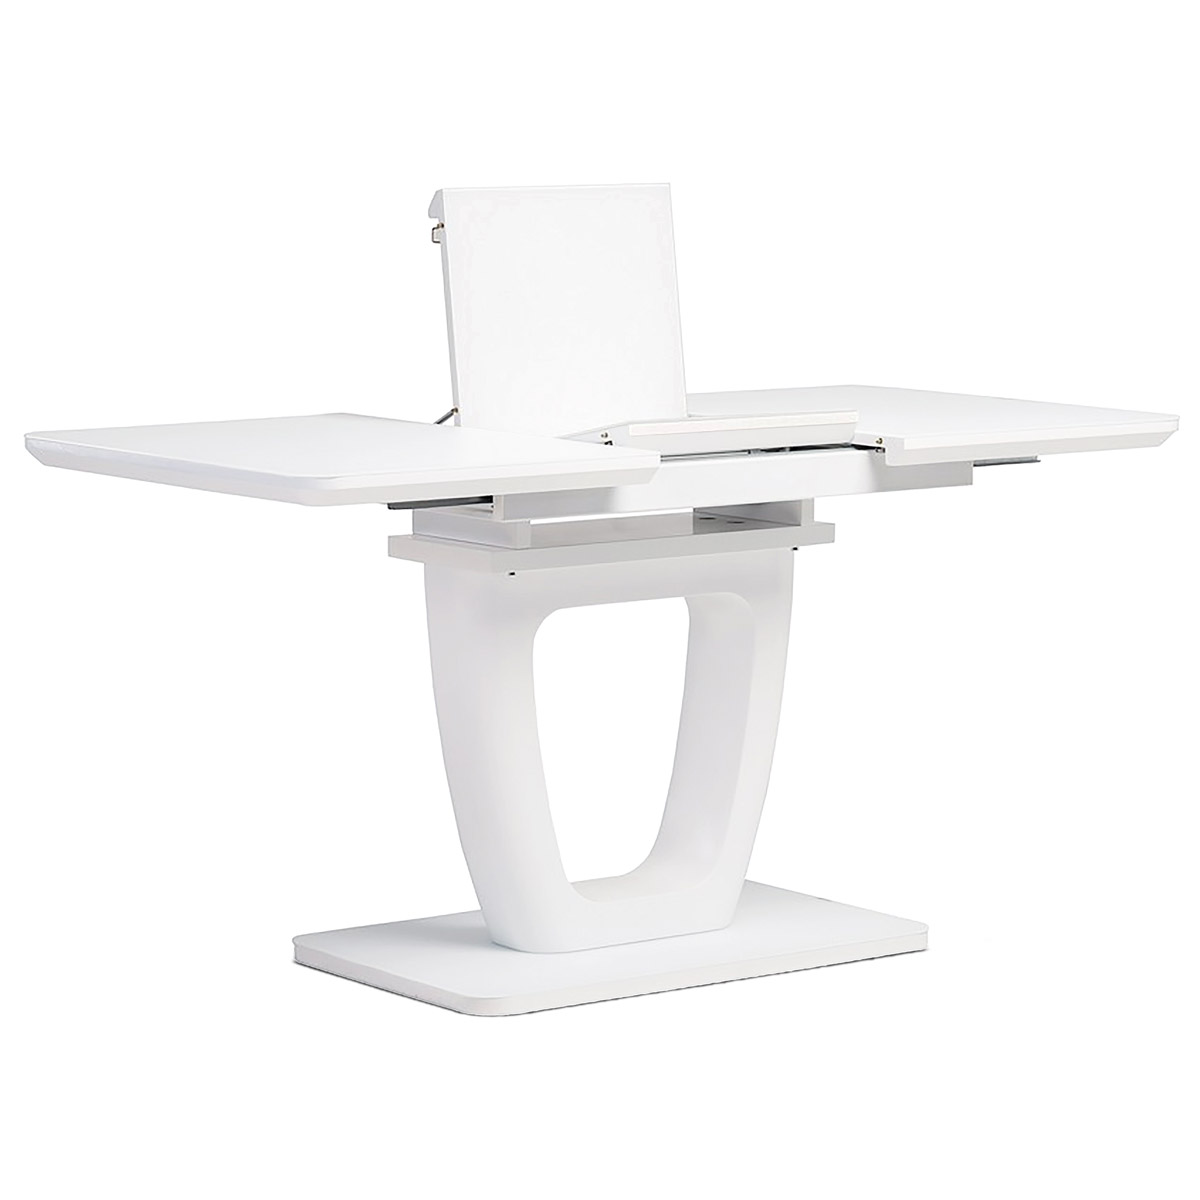 Jídelní stůl HT-430 WT 110+40x75 cm, bílá skleněná deska, MDF a bílý matný lak